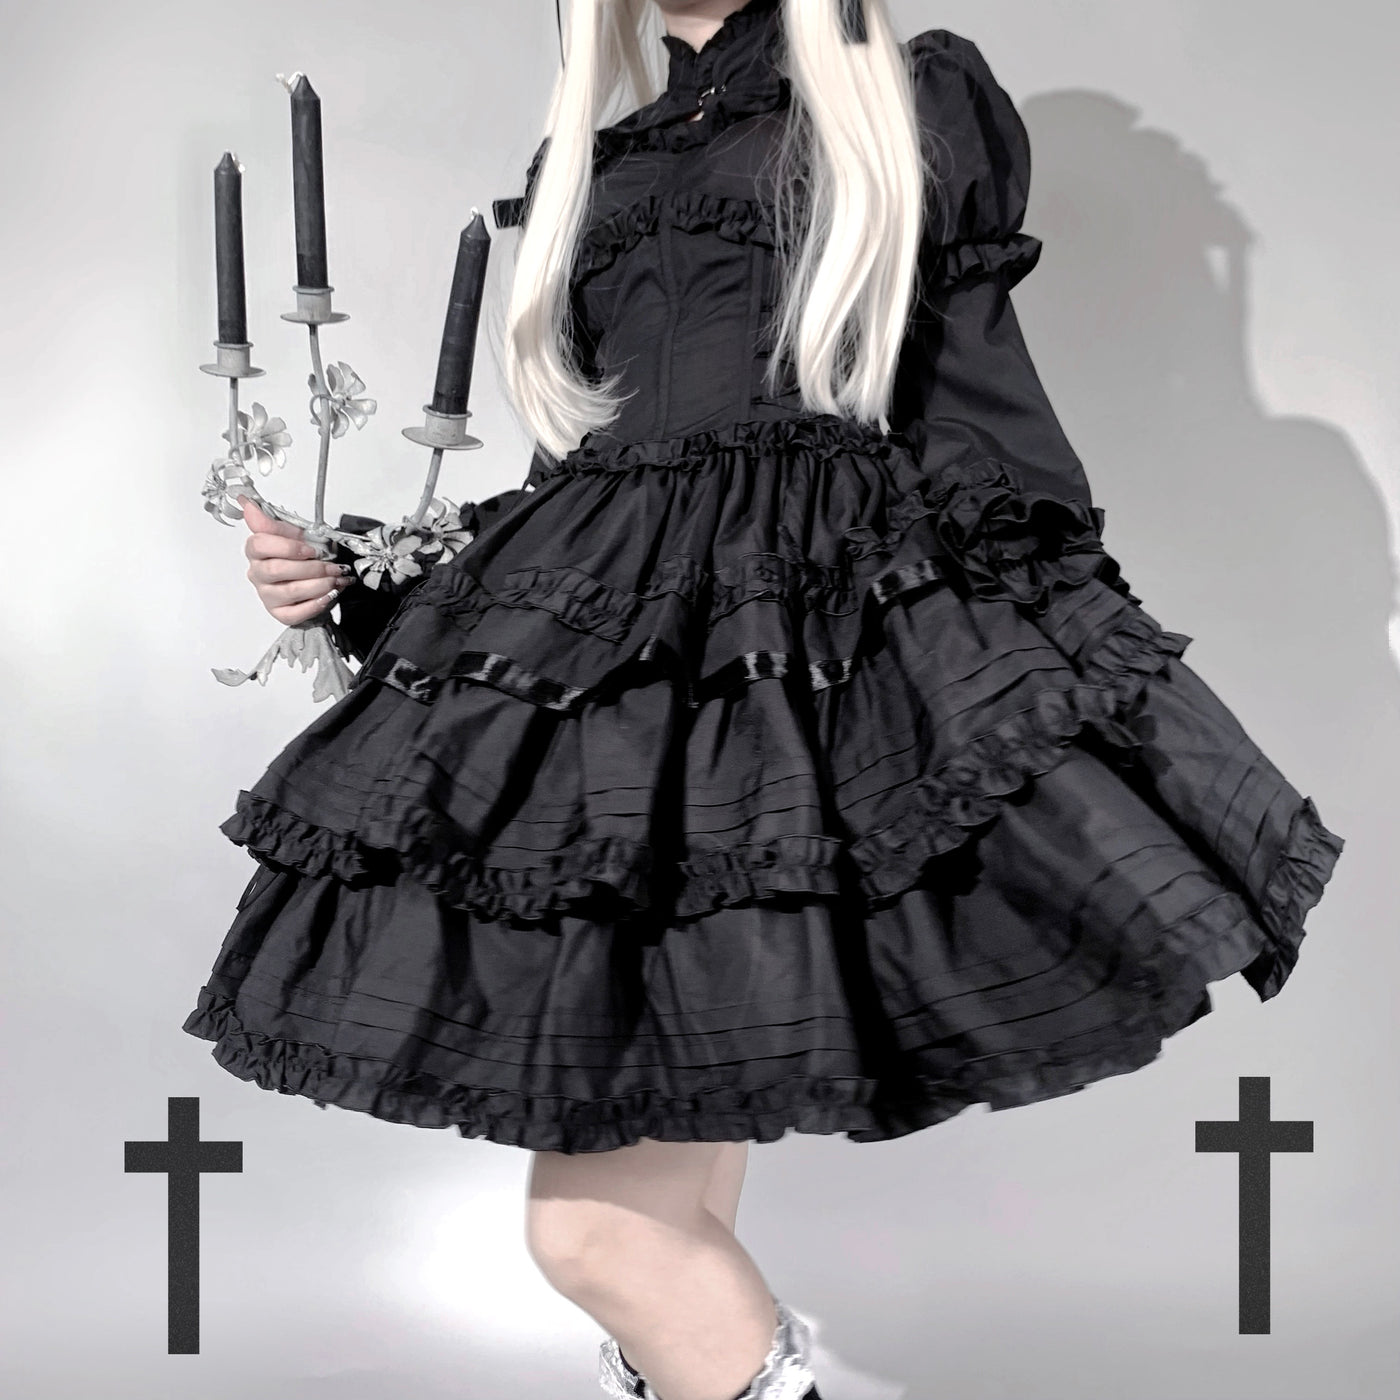 Mengfuzi~LiLith Accesspry Vintage Gothic Lolita Sleeves Bonnet Hairclips black hairclips  